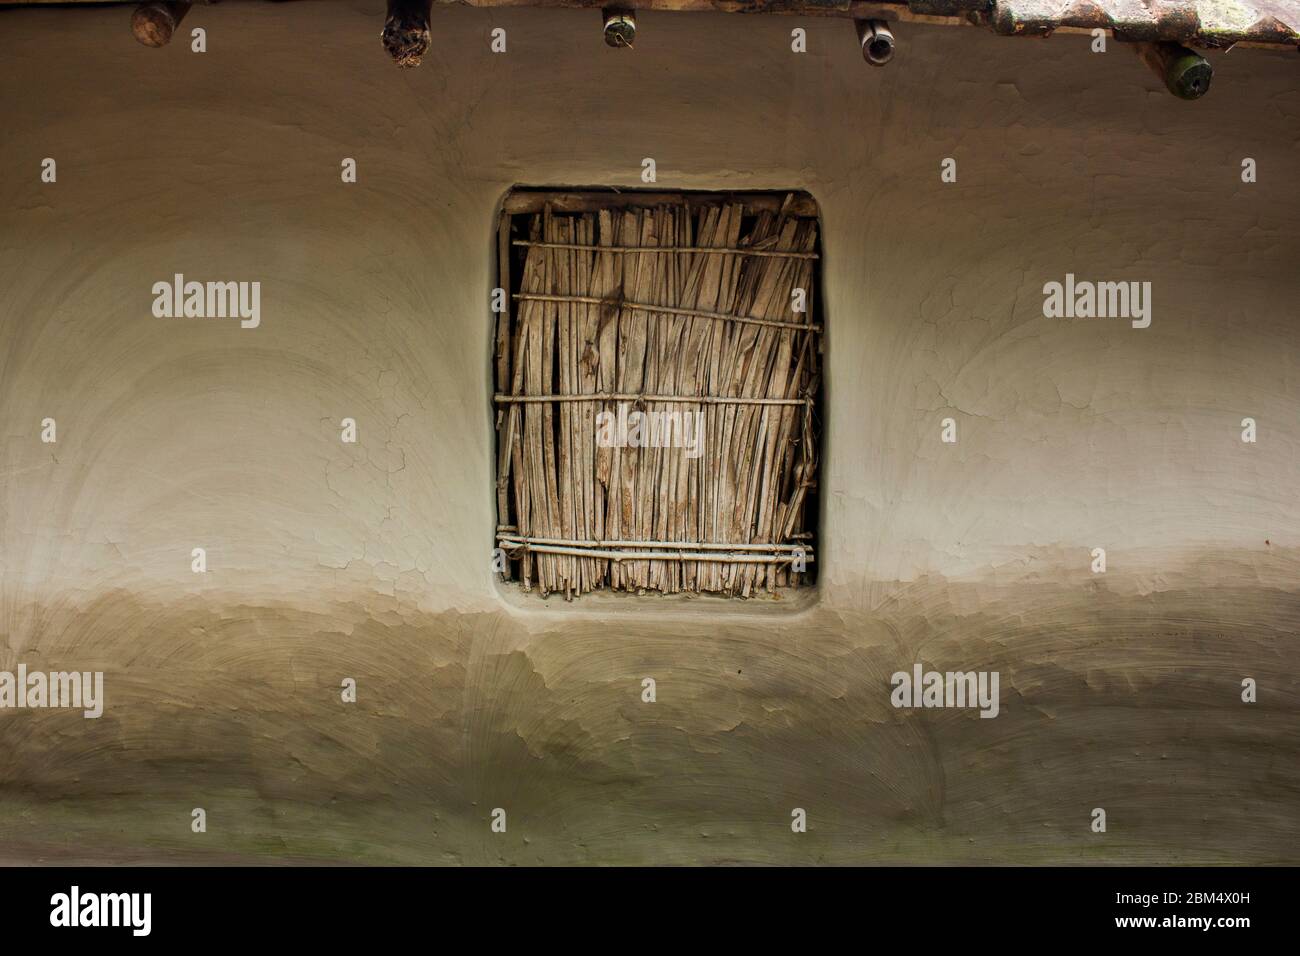 The mud house window in Koia, Khulna, Bangladesh. Stock Photo